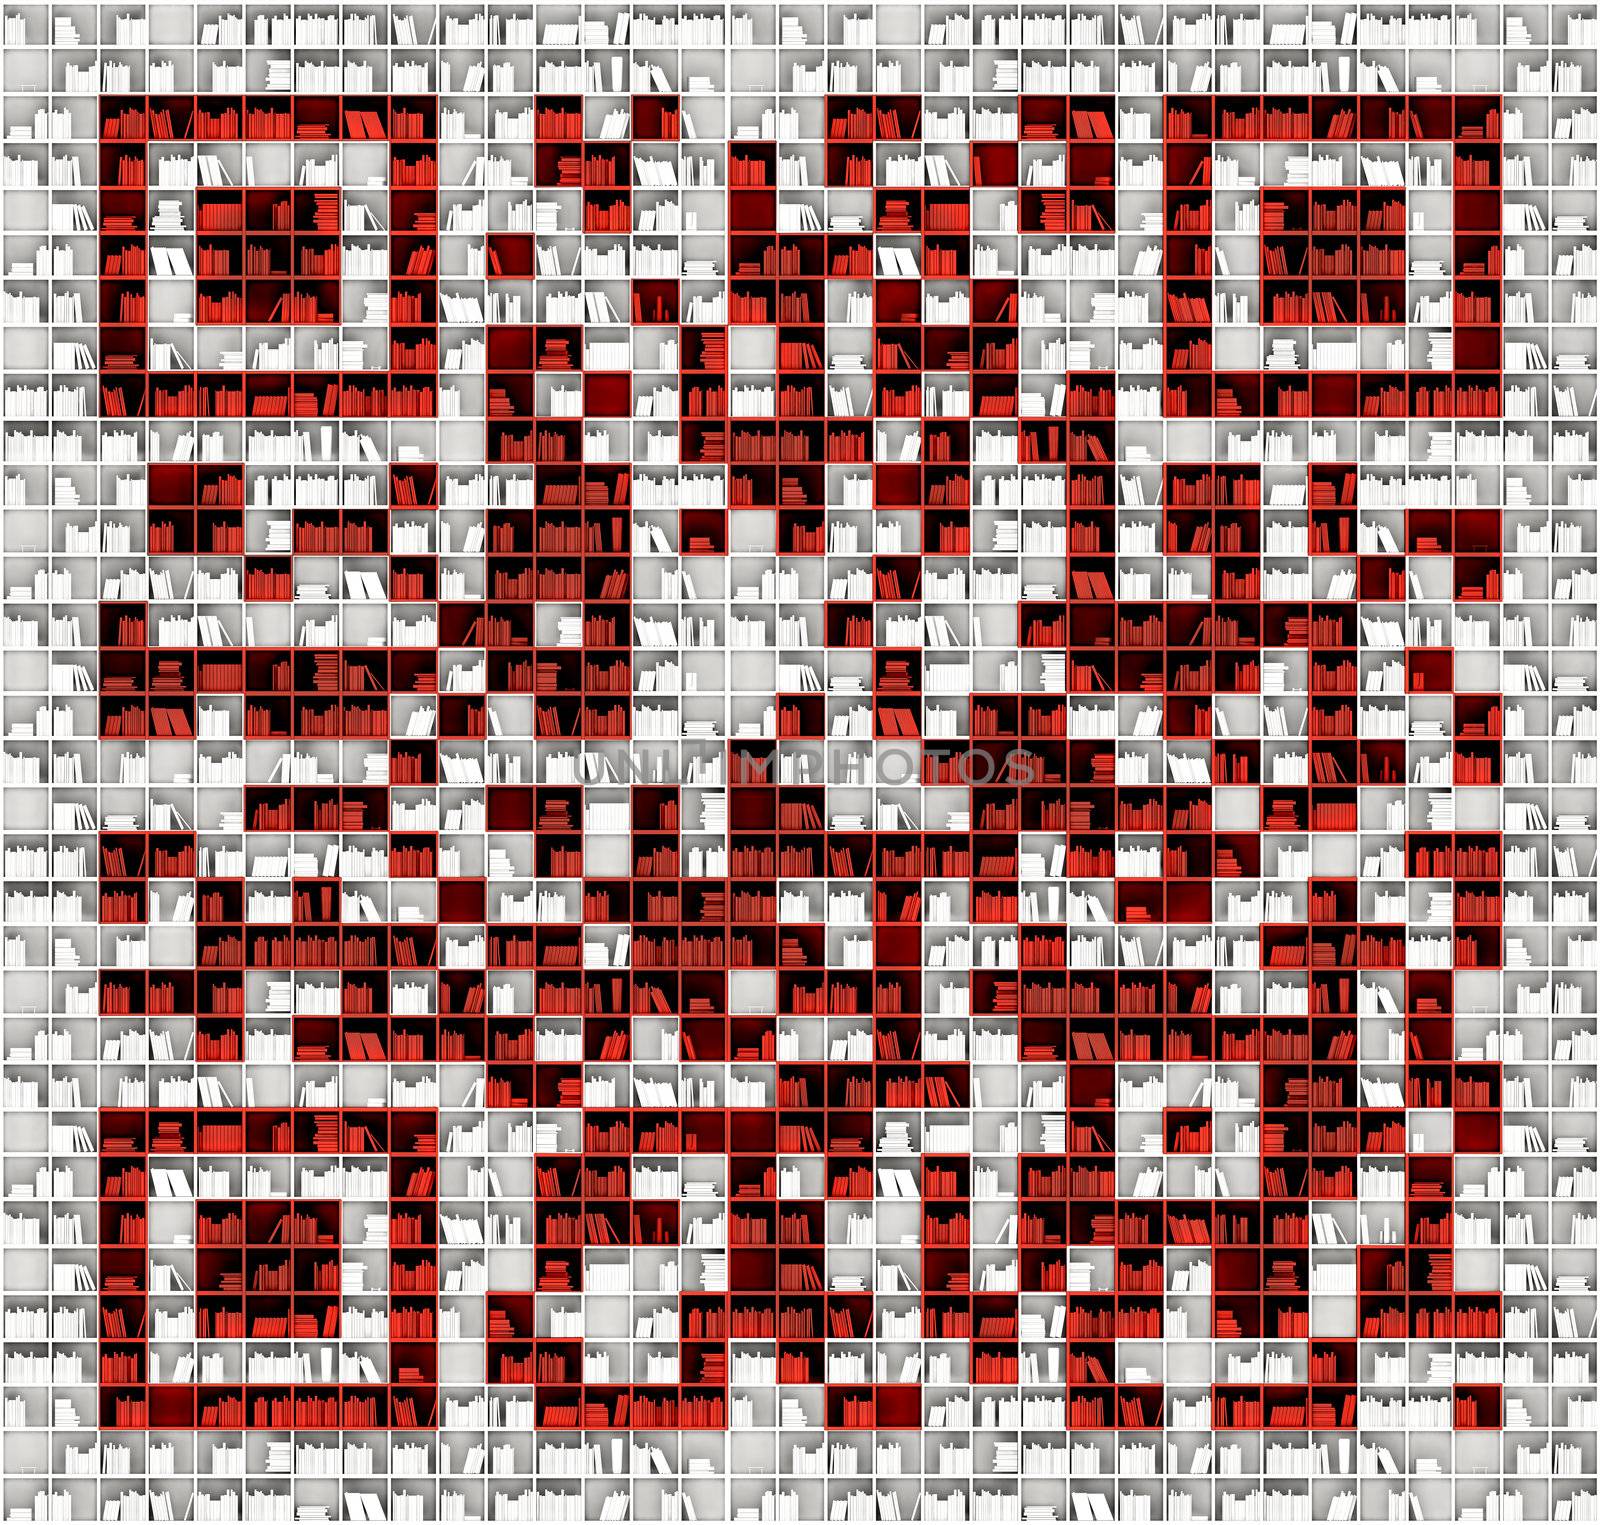 QR code in matrix of bookshelfs (illustrated concept)